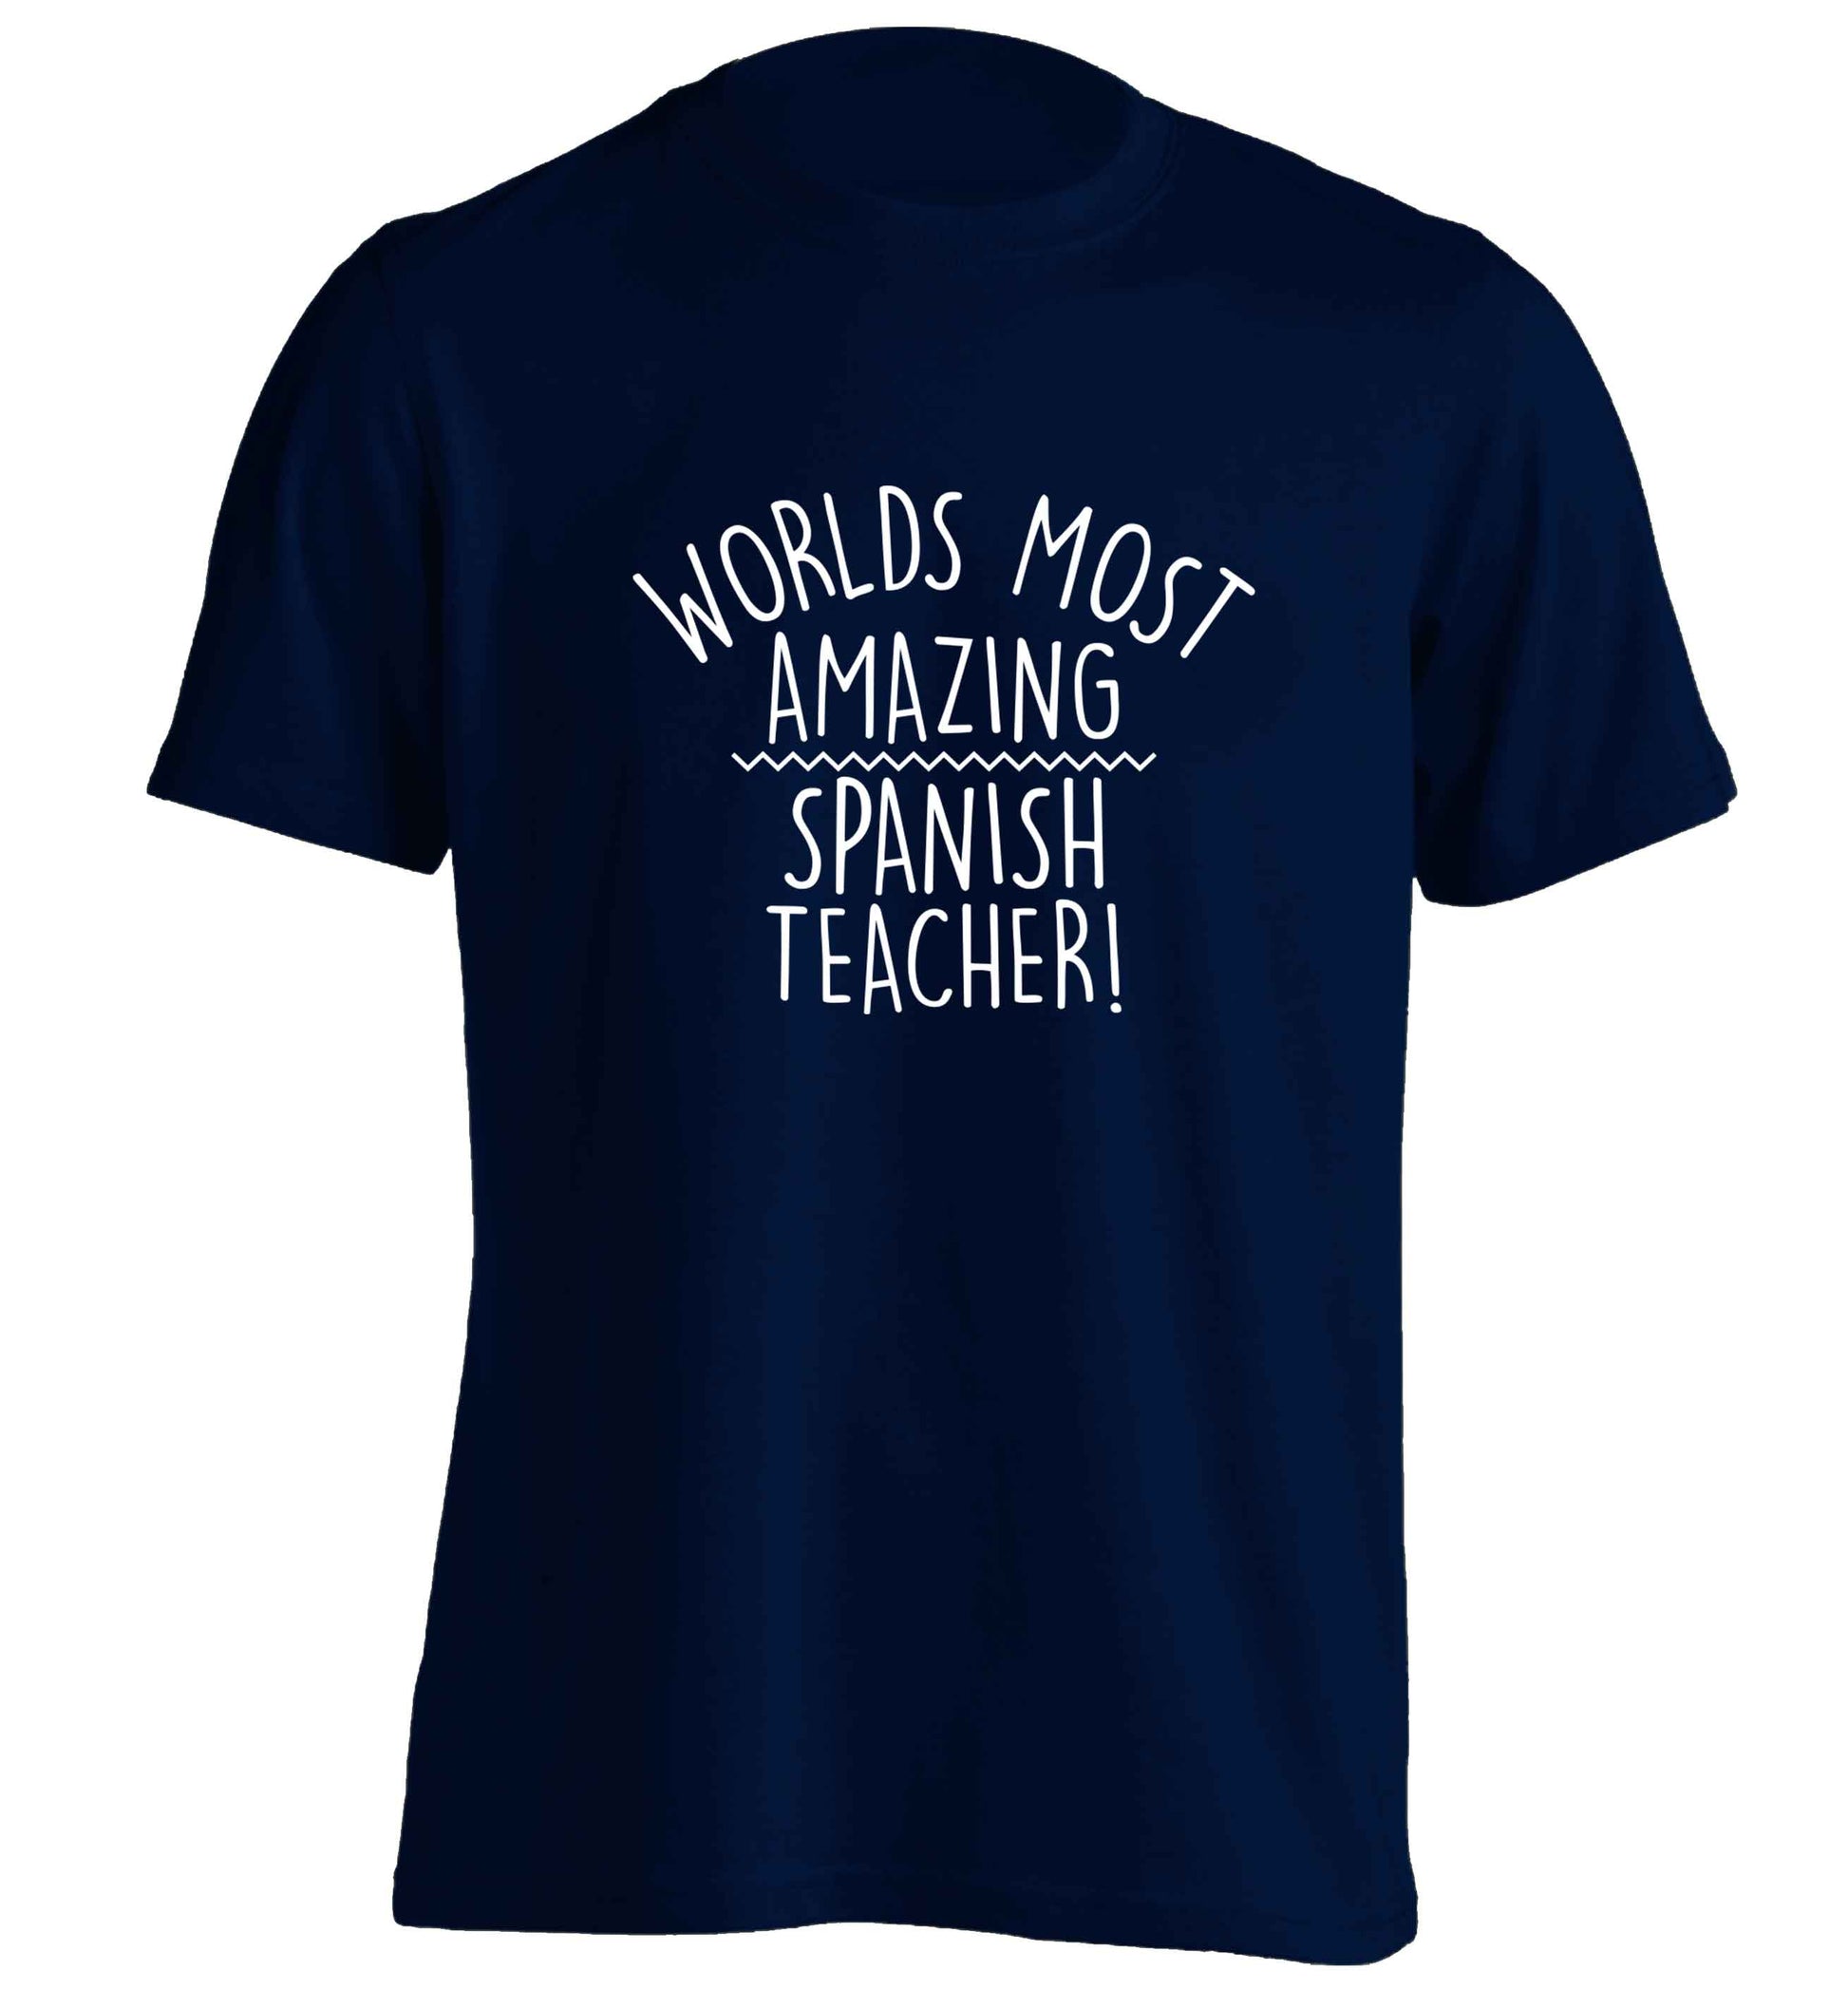 Worlds most amazing Spanish teacher adults unisex navy Tshirt 2XL